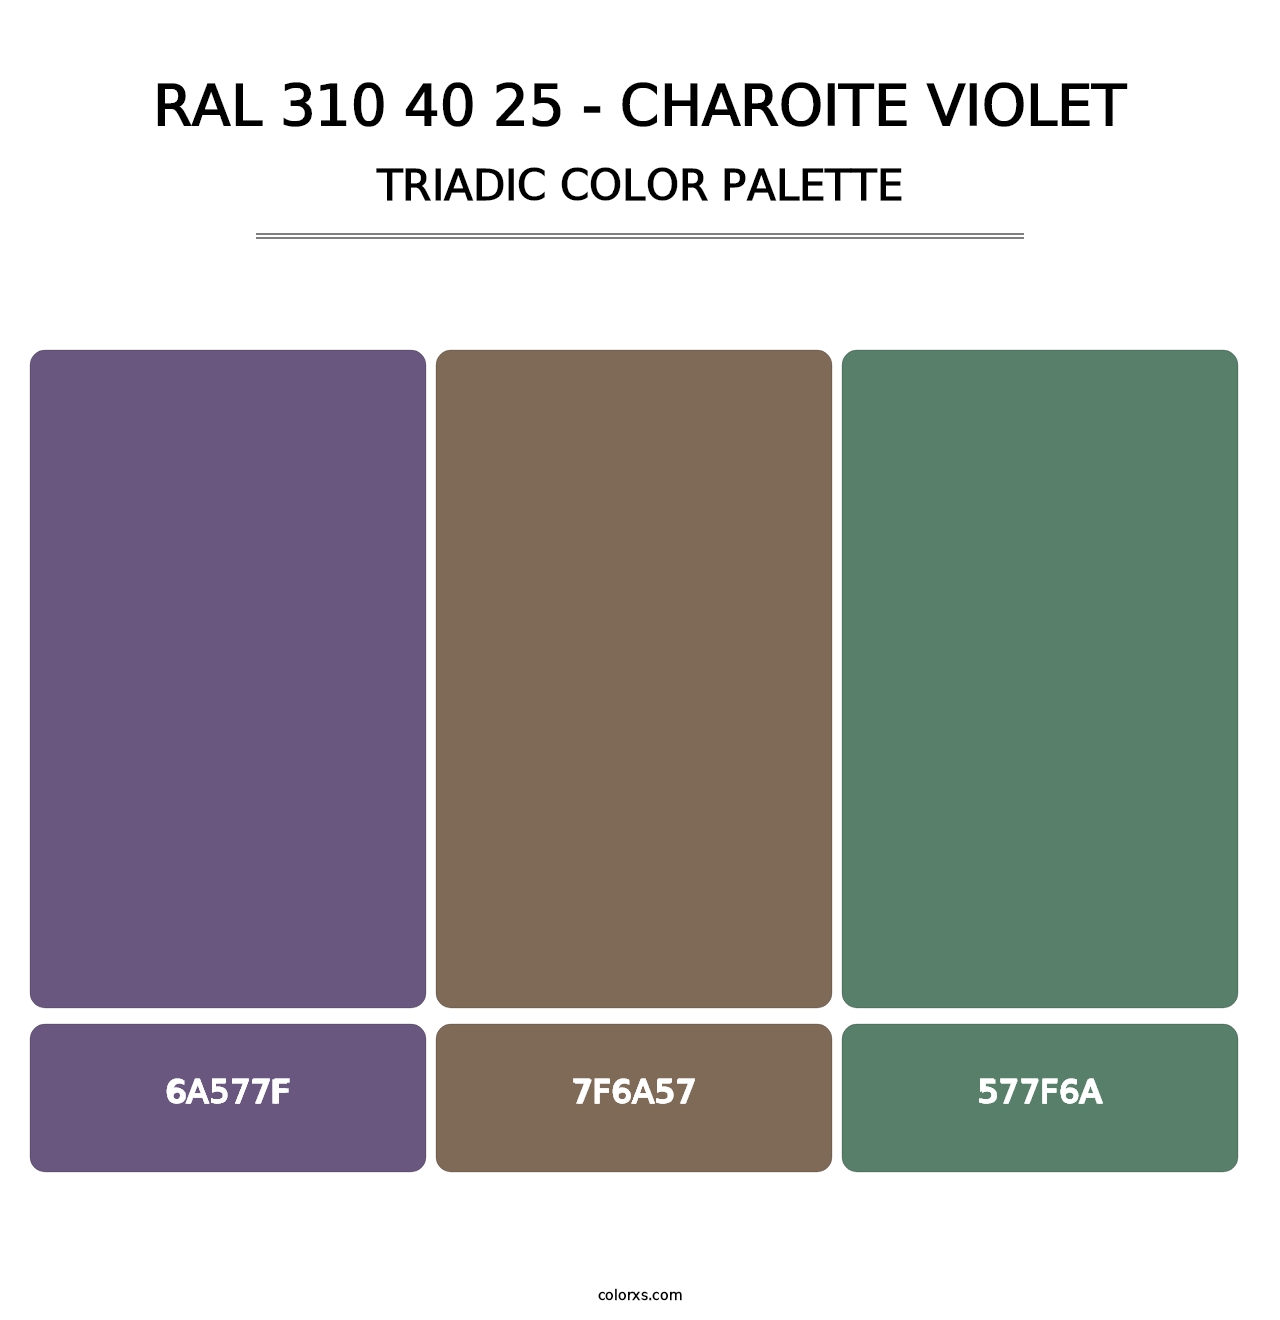 RAL 310 40 25 - Charoite Violet - Triadic Color Palette